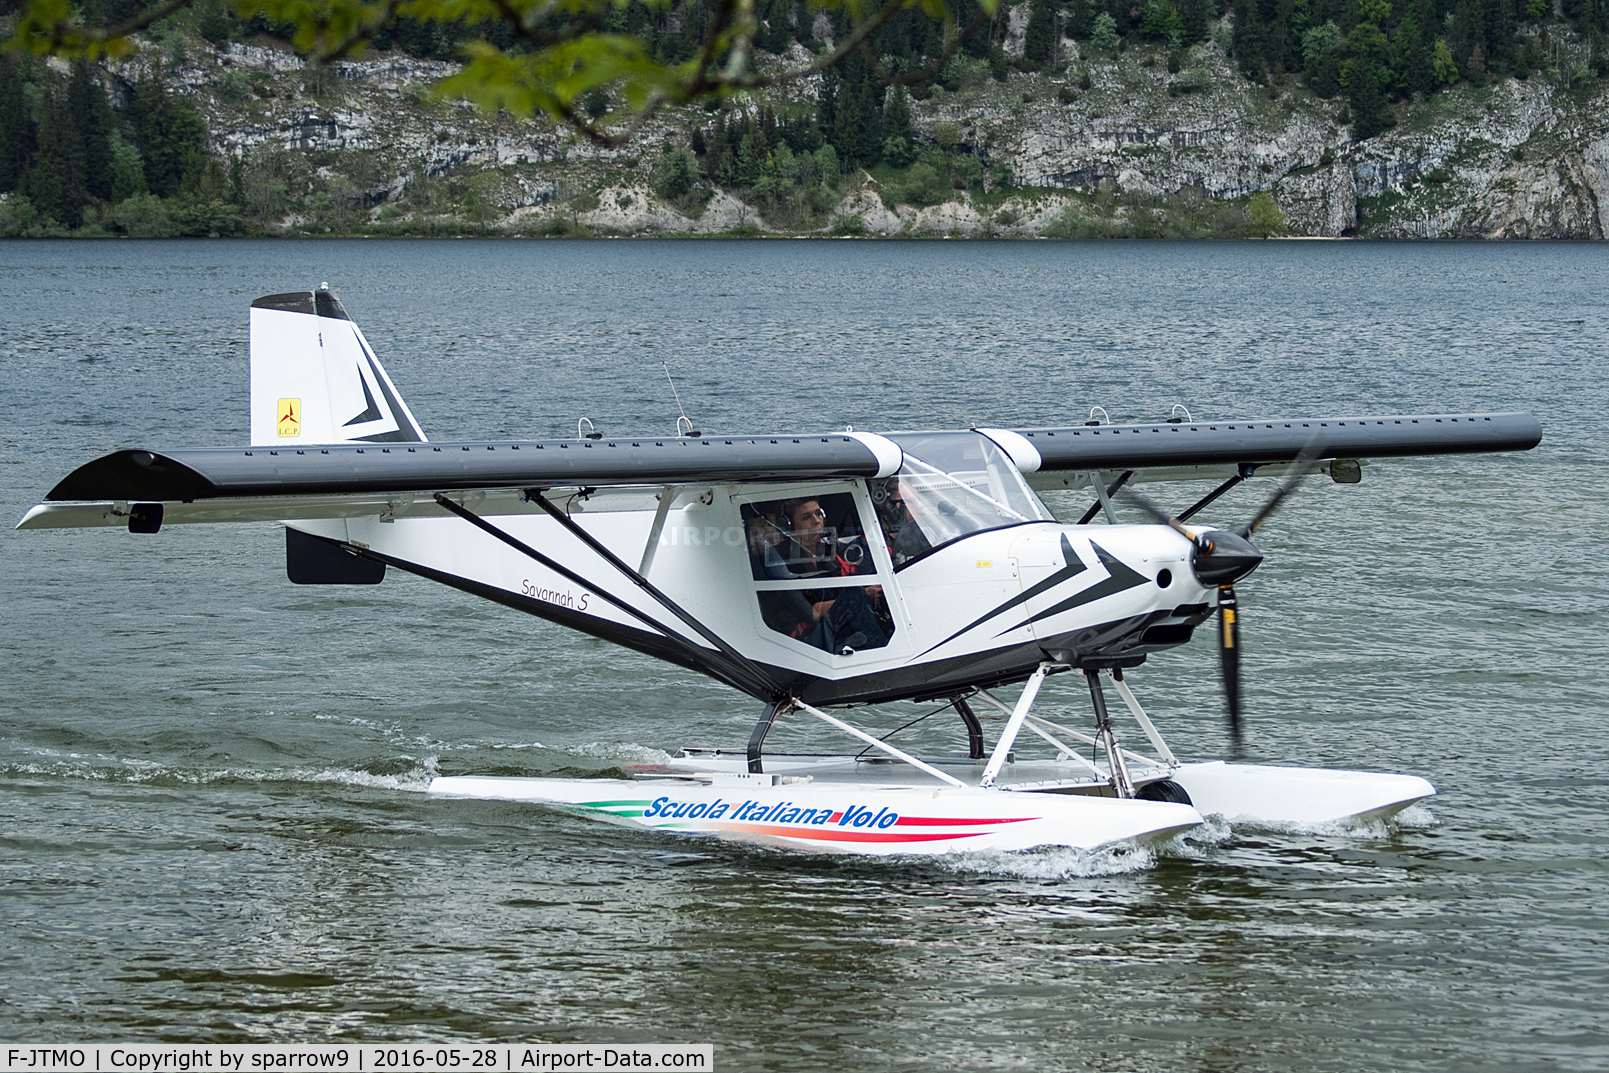 F-JTMO, ICP MXP-740 Savannah S C/N 11-12-54-0136, At Lac de Joux, in Swiss Jura mountains, Seaplane-meet.